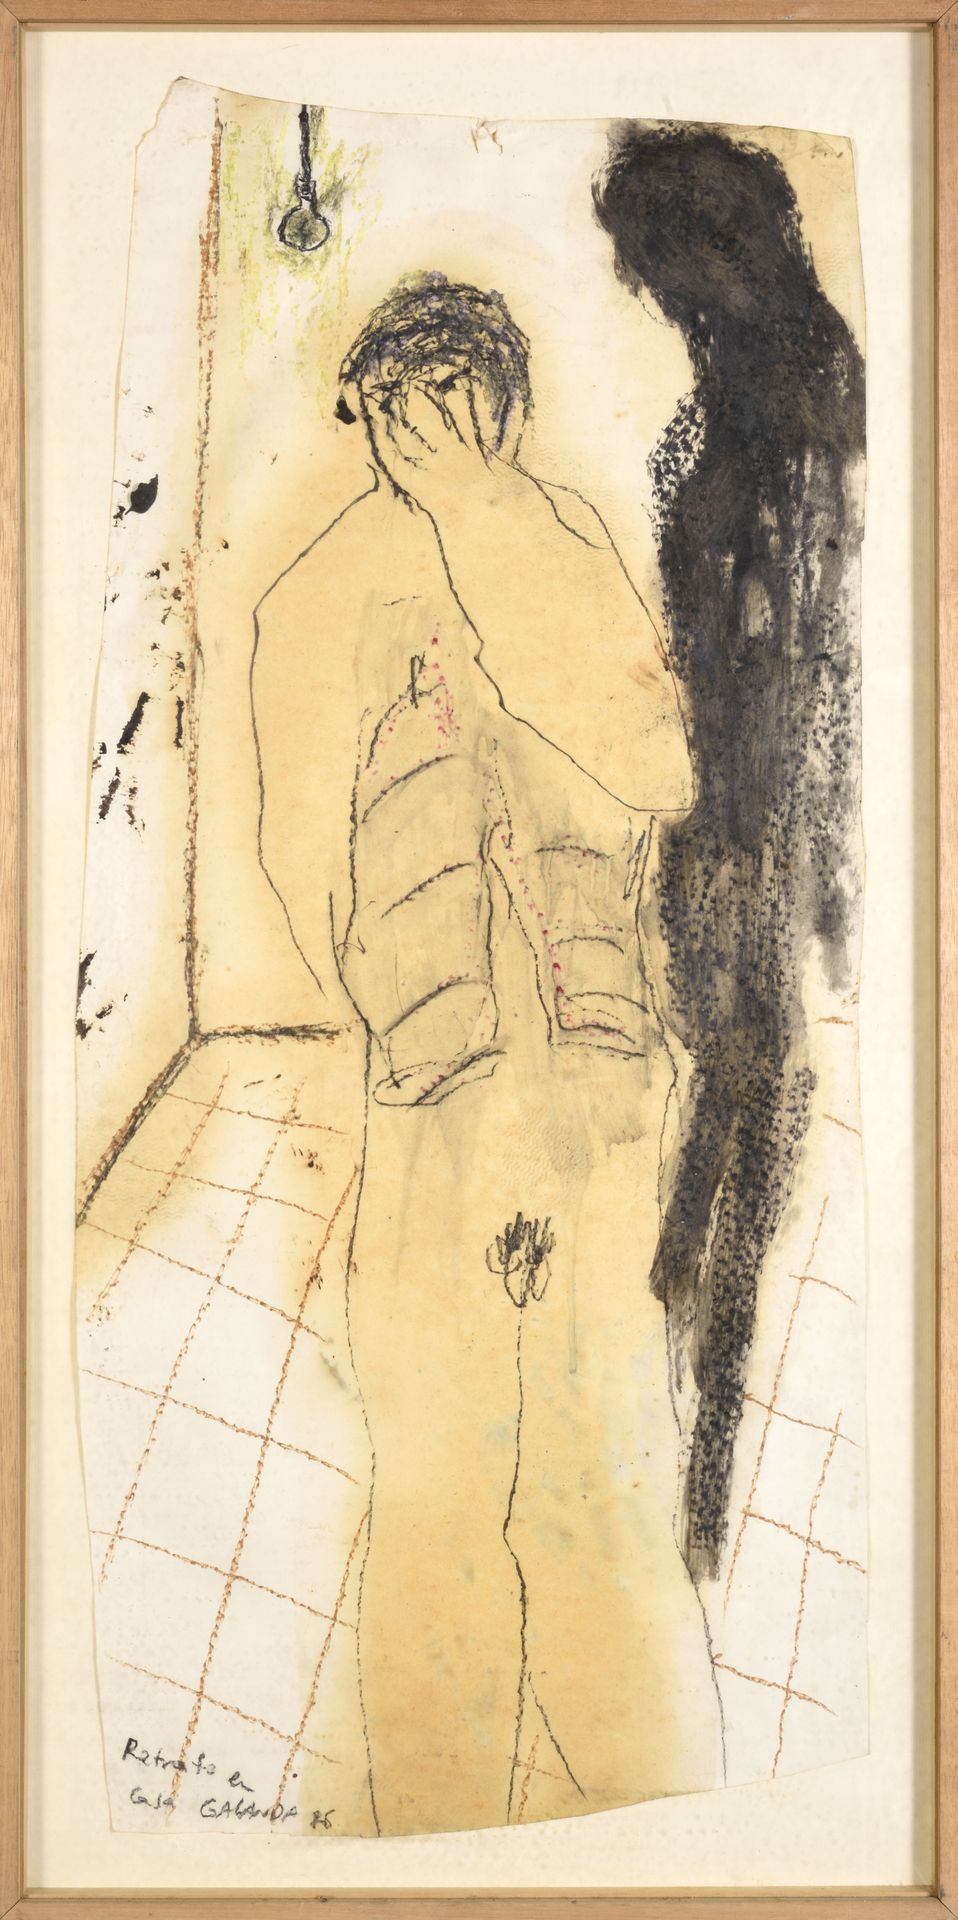 MIGUEL GALANDA (NÉ EN 1951) 米格尔-加兰达（生于1951年

在家里画画, 1986

纸上混合媒体，左下方有签名、标题和日期。

&hellip;